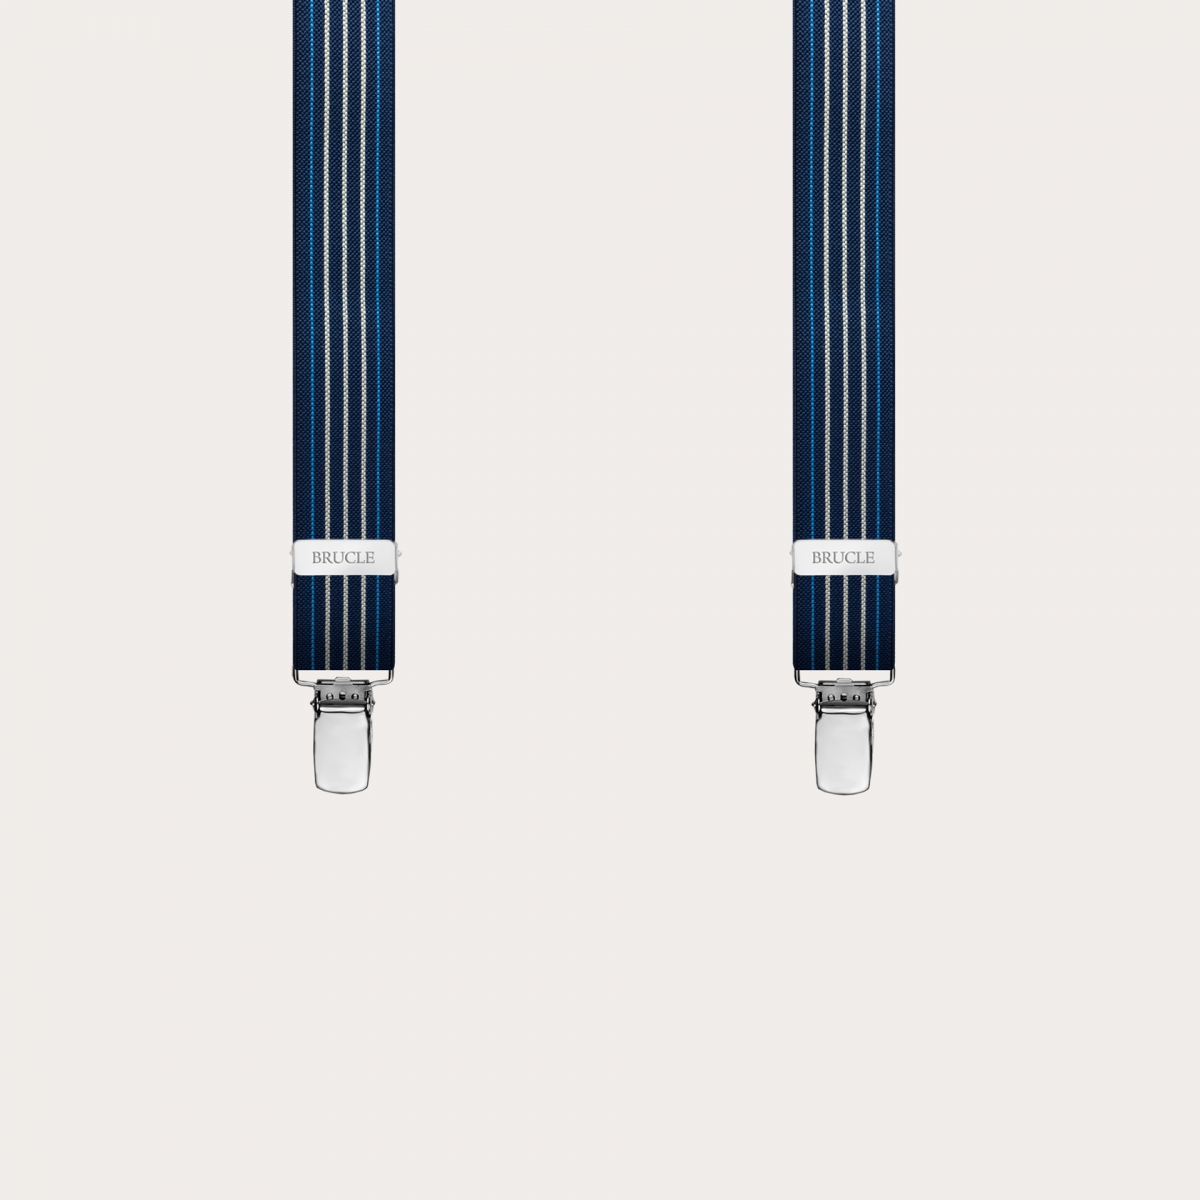 BRUCLE Elegante dünne blaue nickelfreie Hosenträger mit kontrastierenden Linien